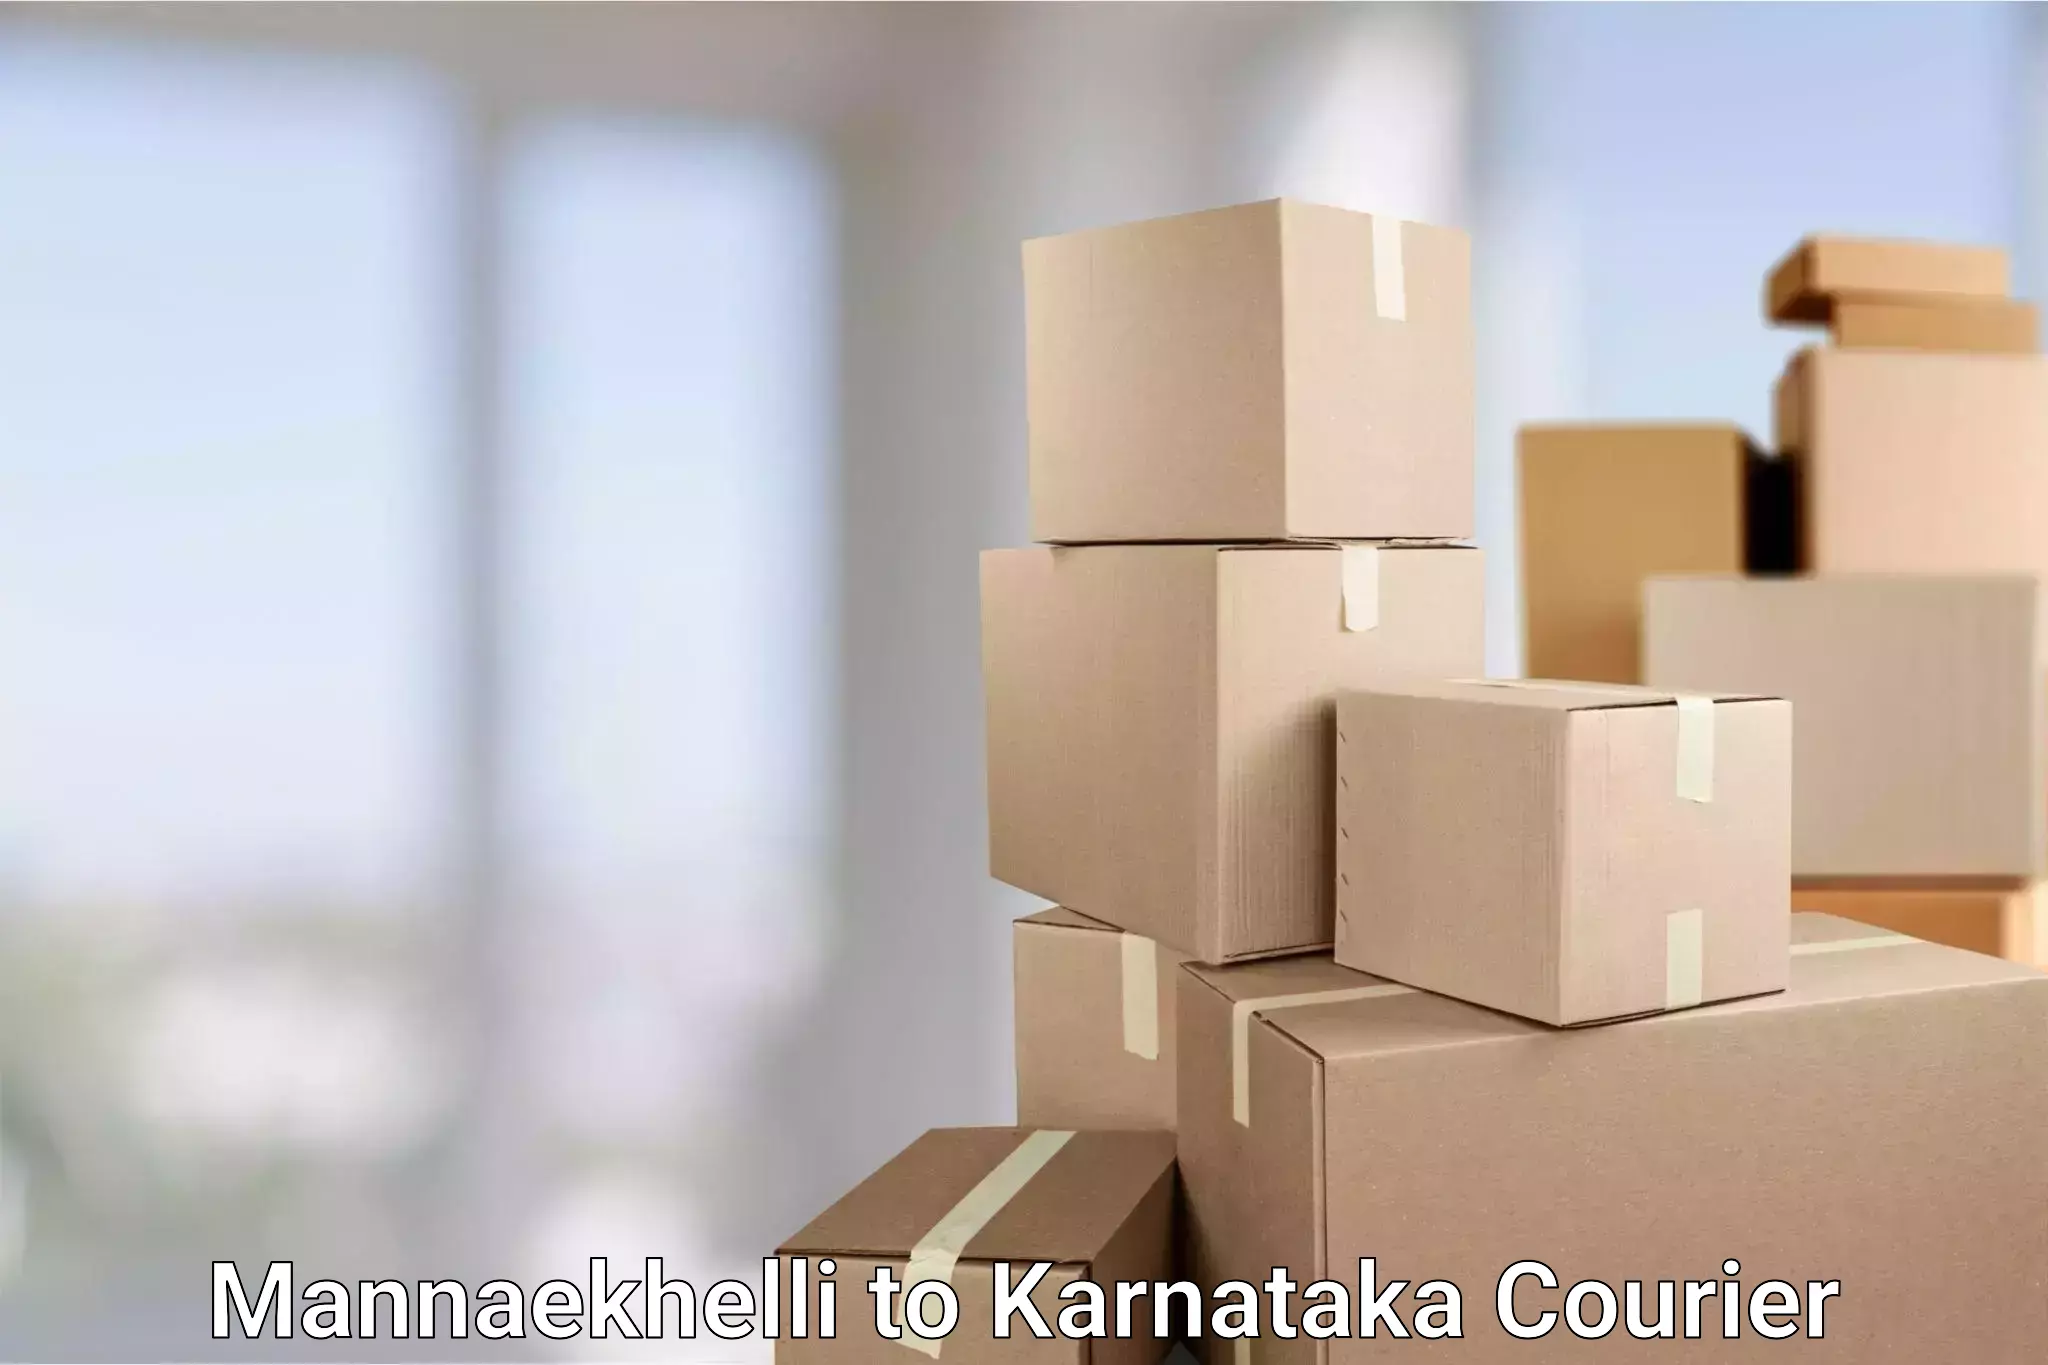 Efficient order fulfillment Mannaekhelli to Bangalore